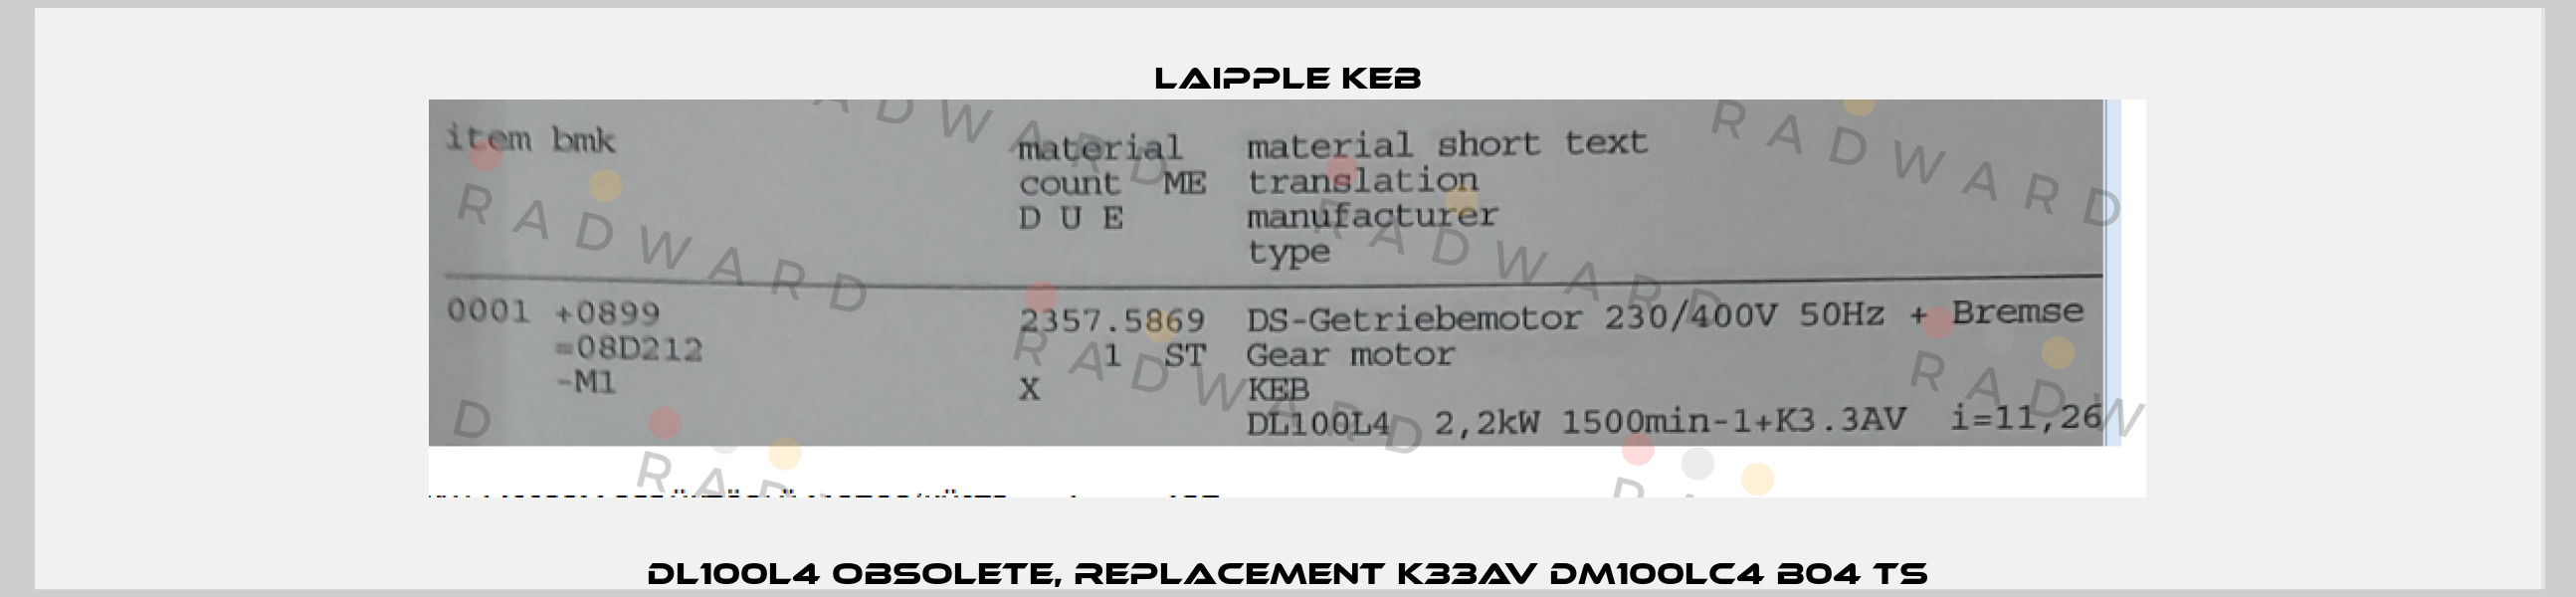 DL100L4 obsolete, replacement K33AV DM100LC4 B04 TS LAIPPLE KEB